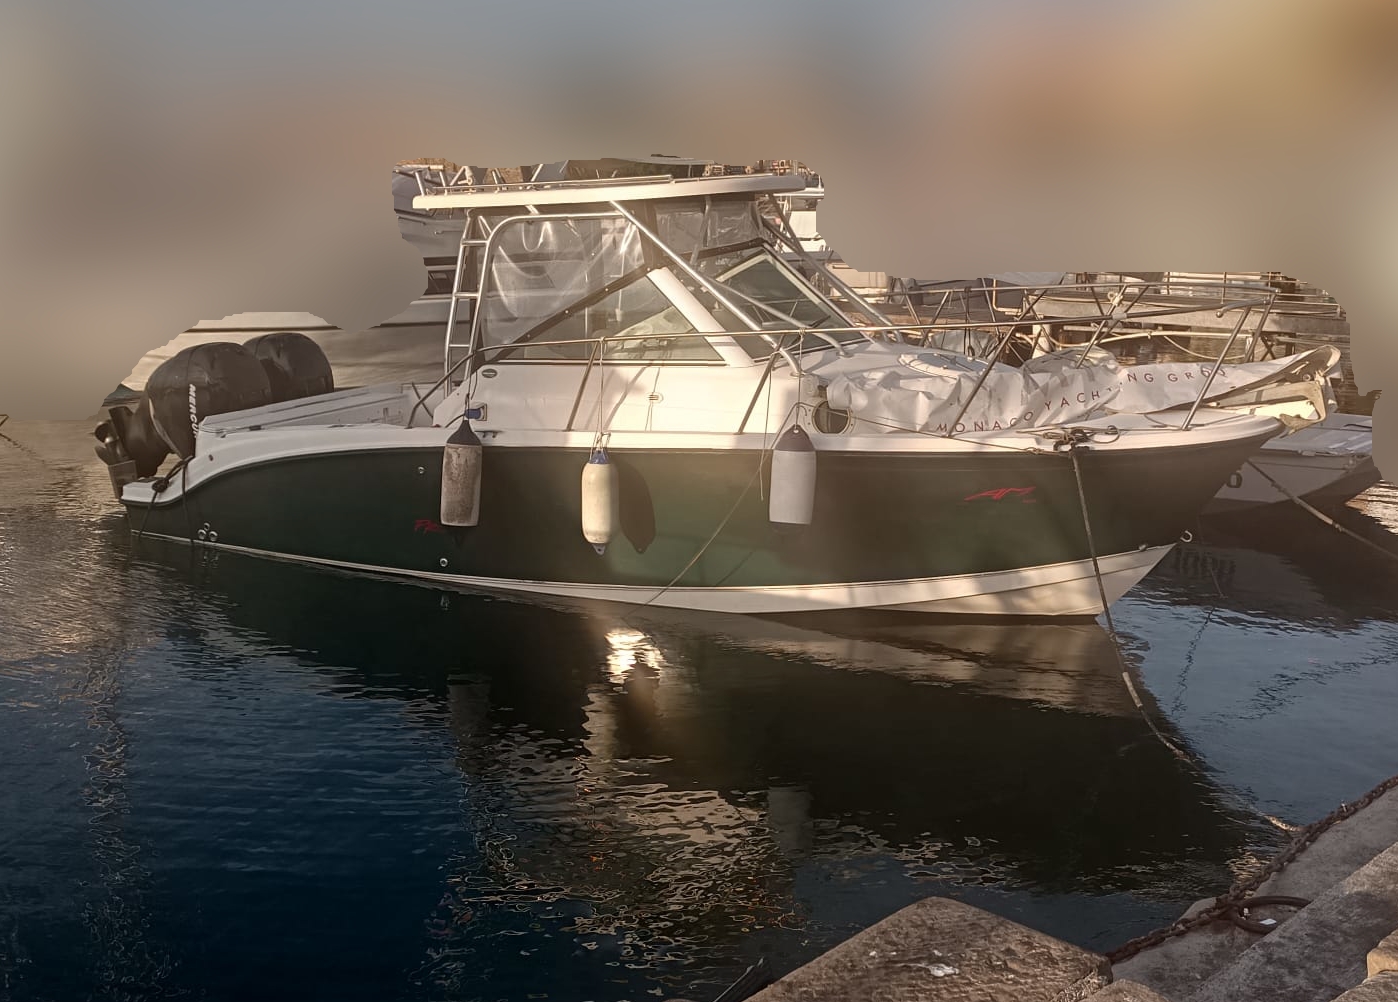 Fiart 35 + 2x200 hp Aifo daycruiser livorno boats imbarcazione boat barco bateaux